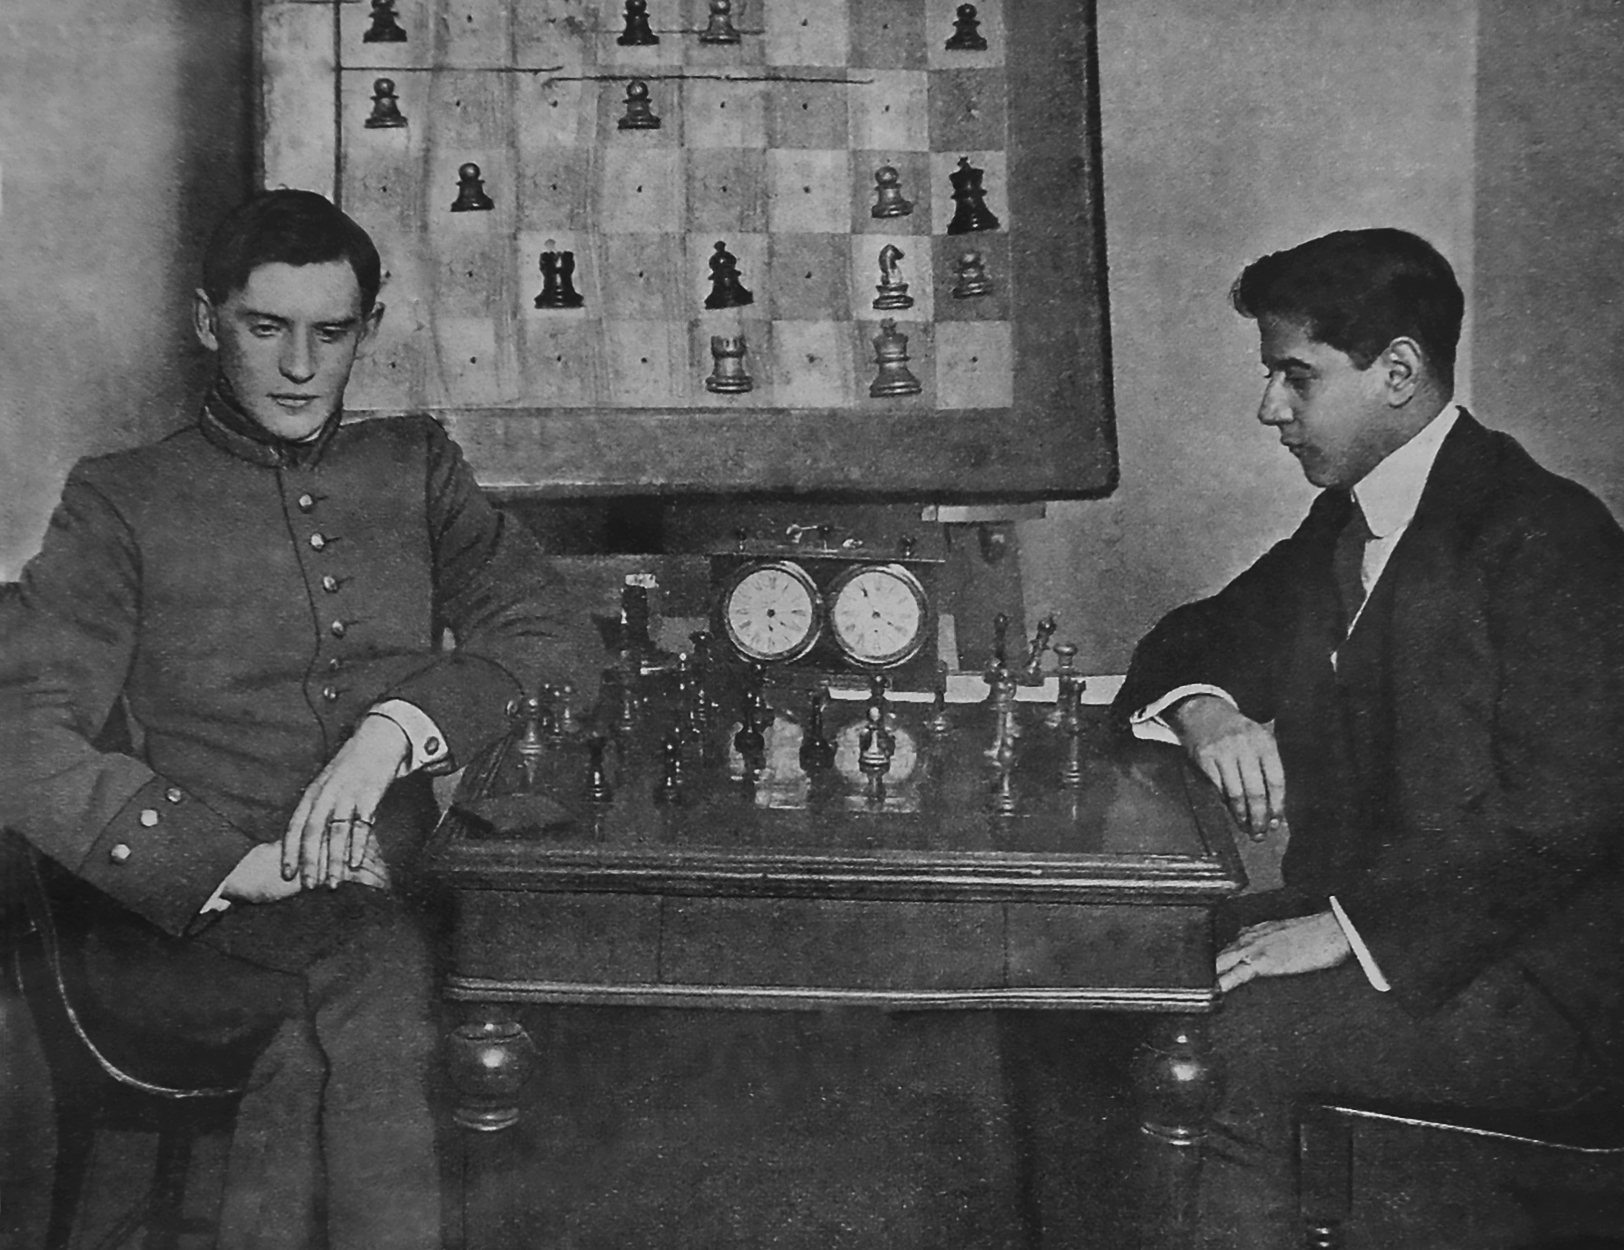 Alekhine rocks the Philidor Defence